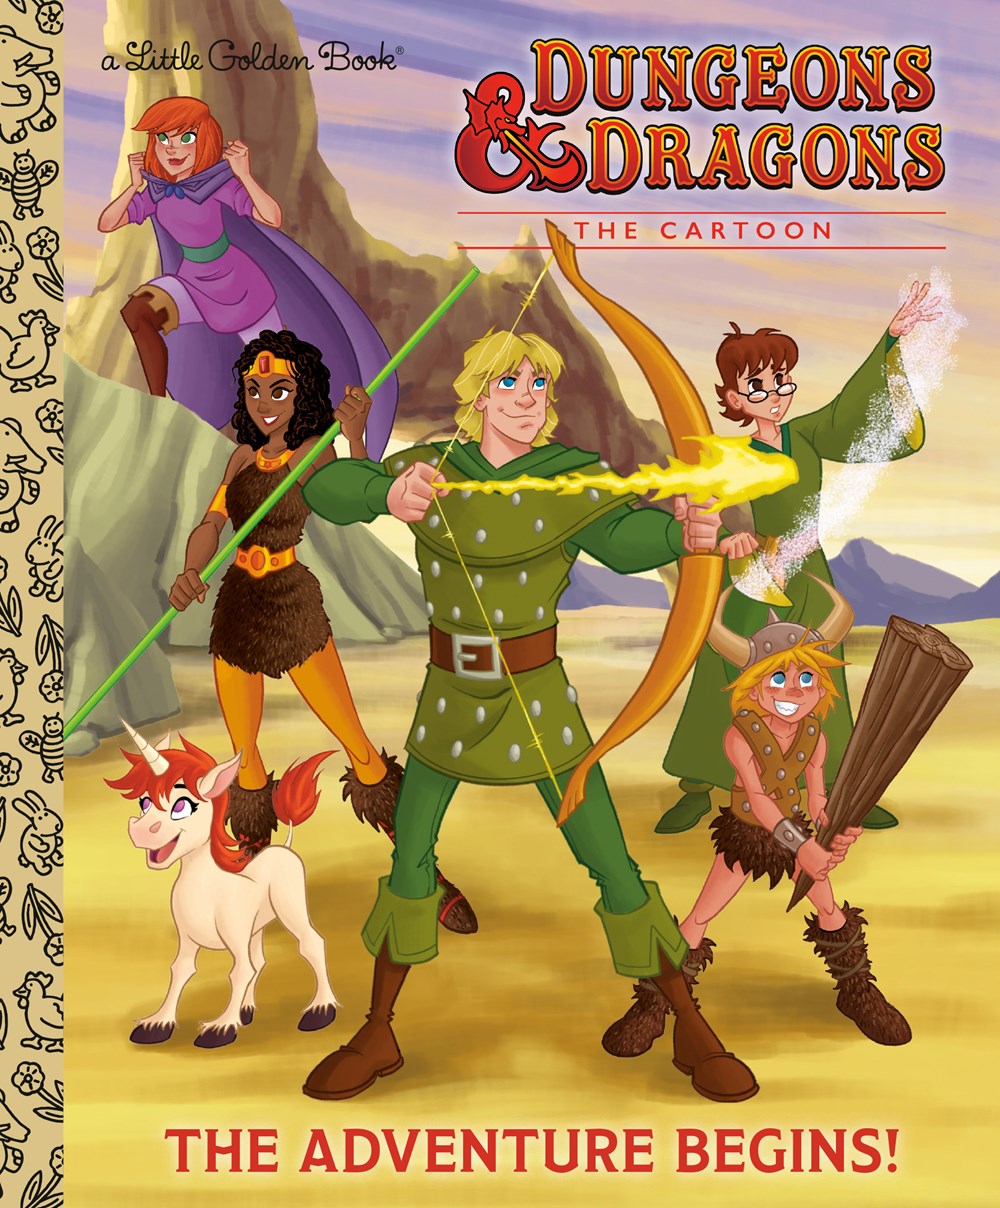 Little Golden Book: The Adventure Begins! (Dungeons & Dragons)